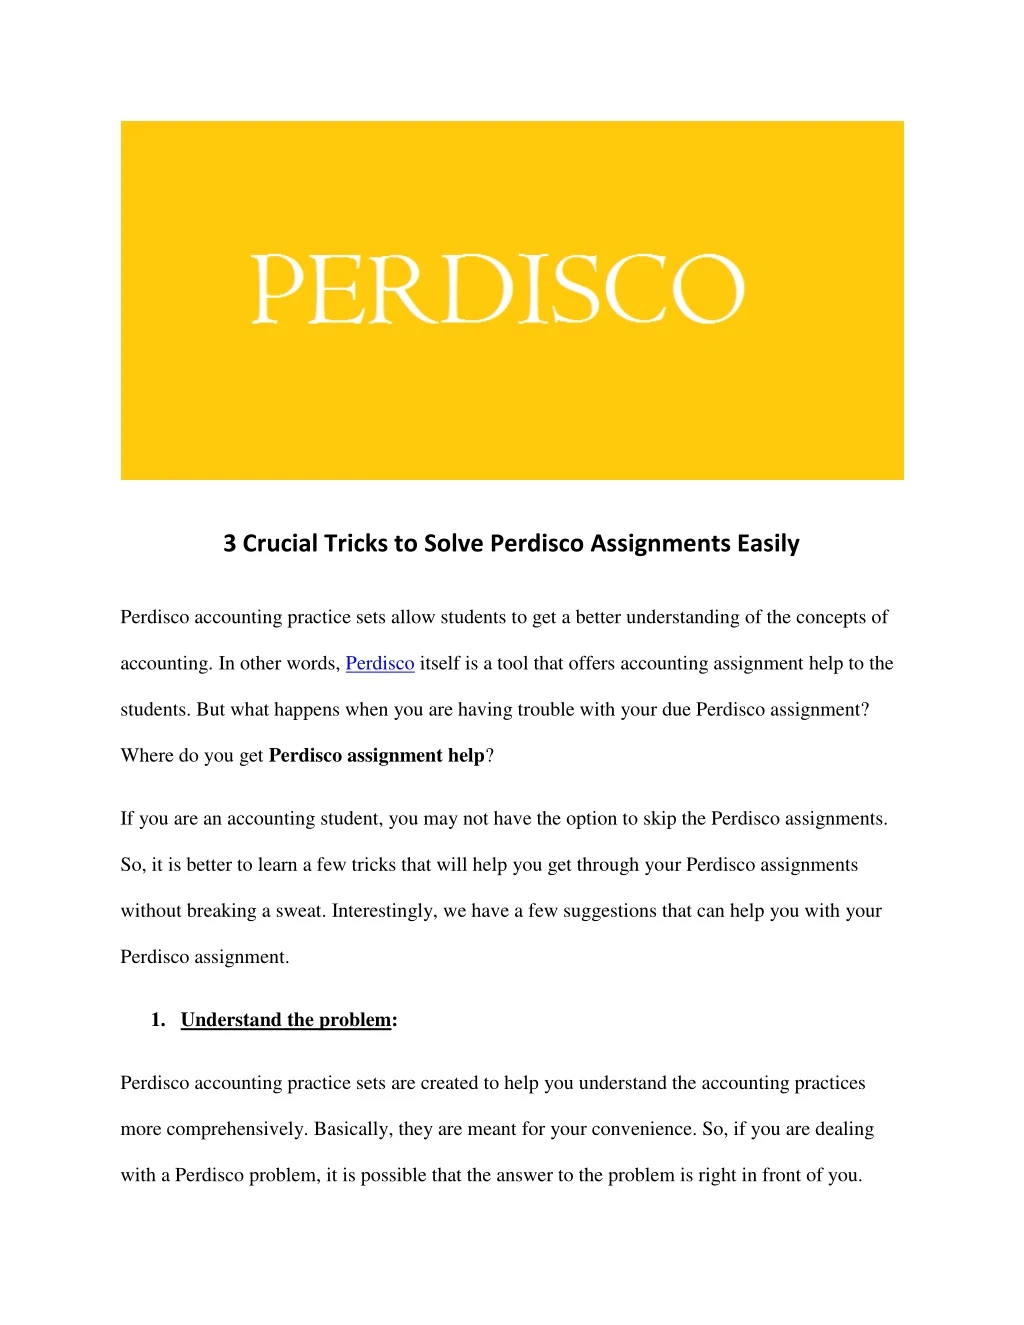 3 crucial tricks to solve perdisco assignments